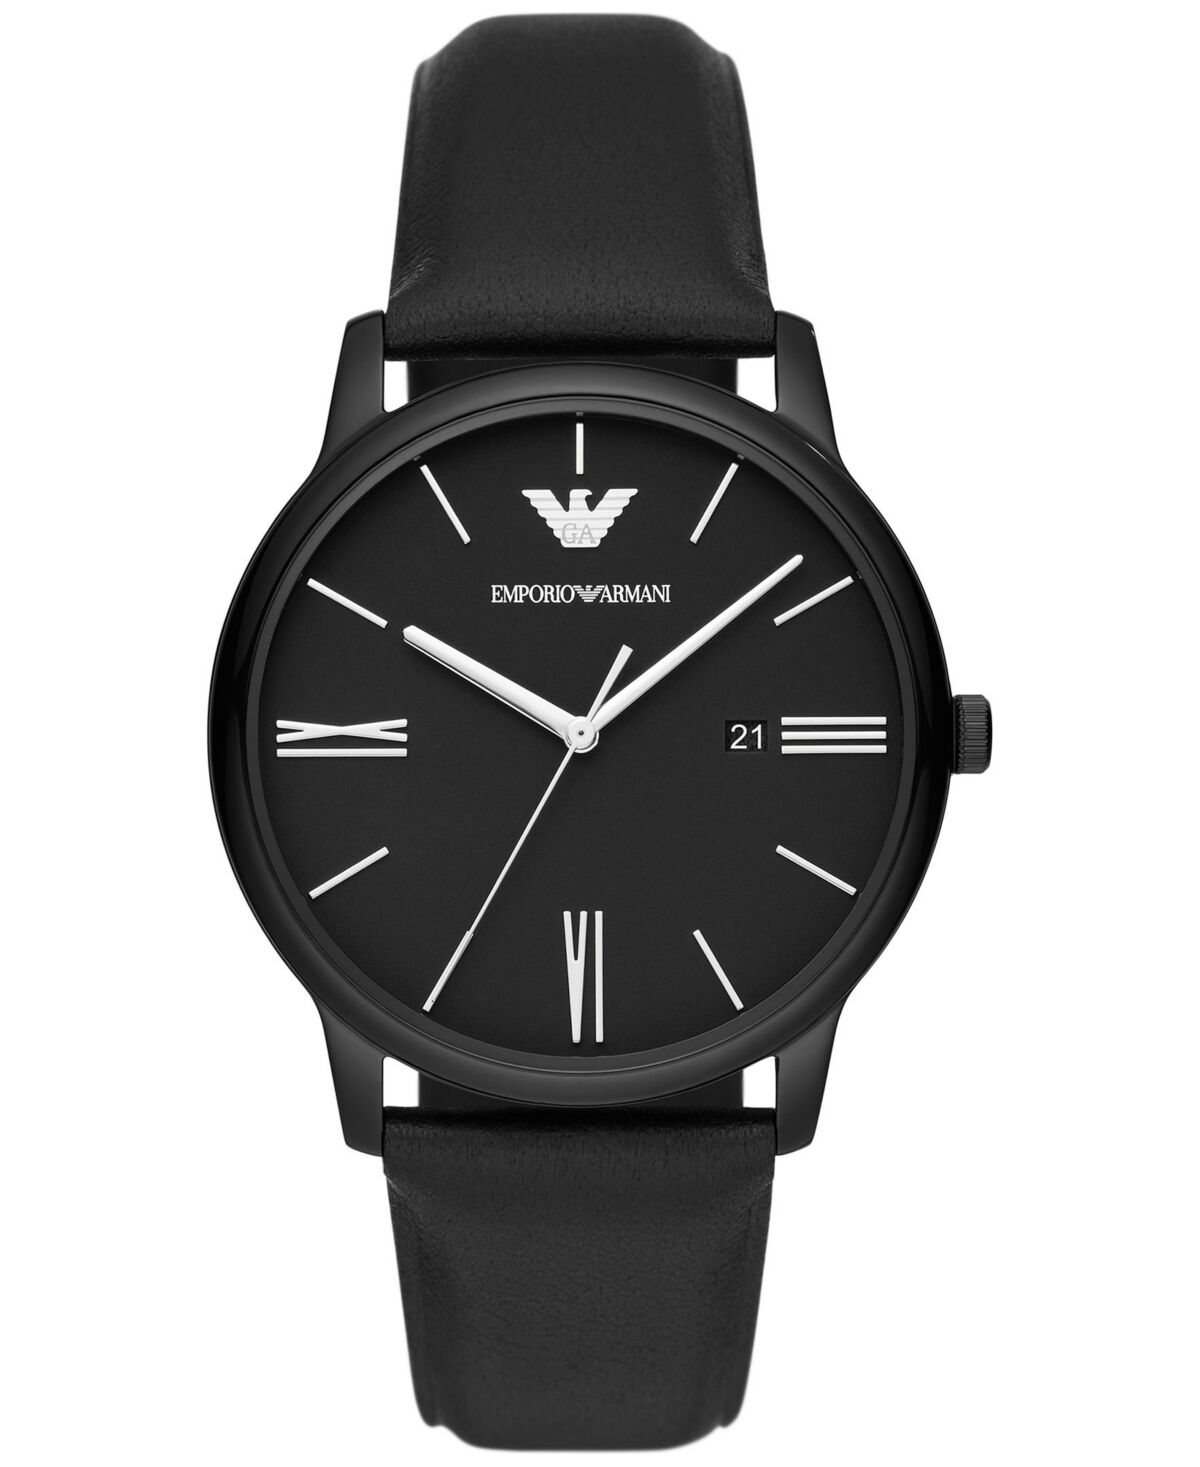 Emporio Armani s Black Leather Strap Watch 42mm - Black